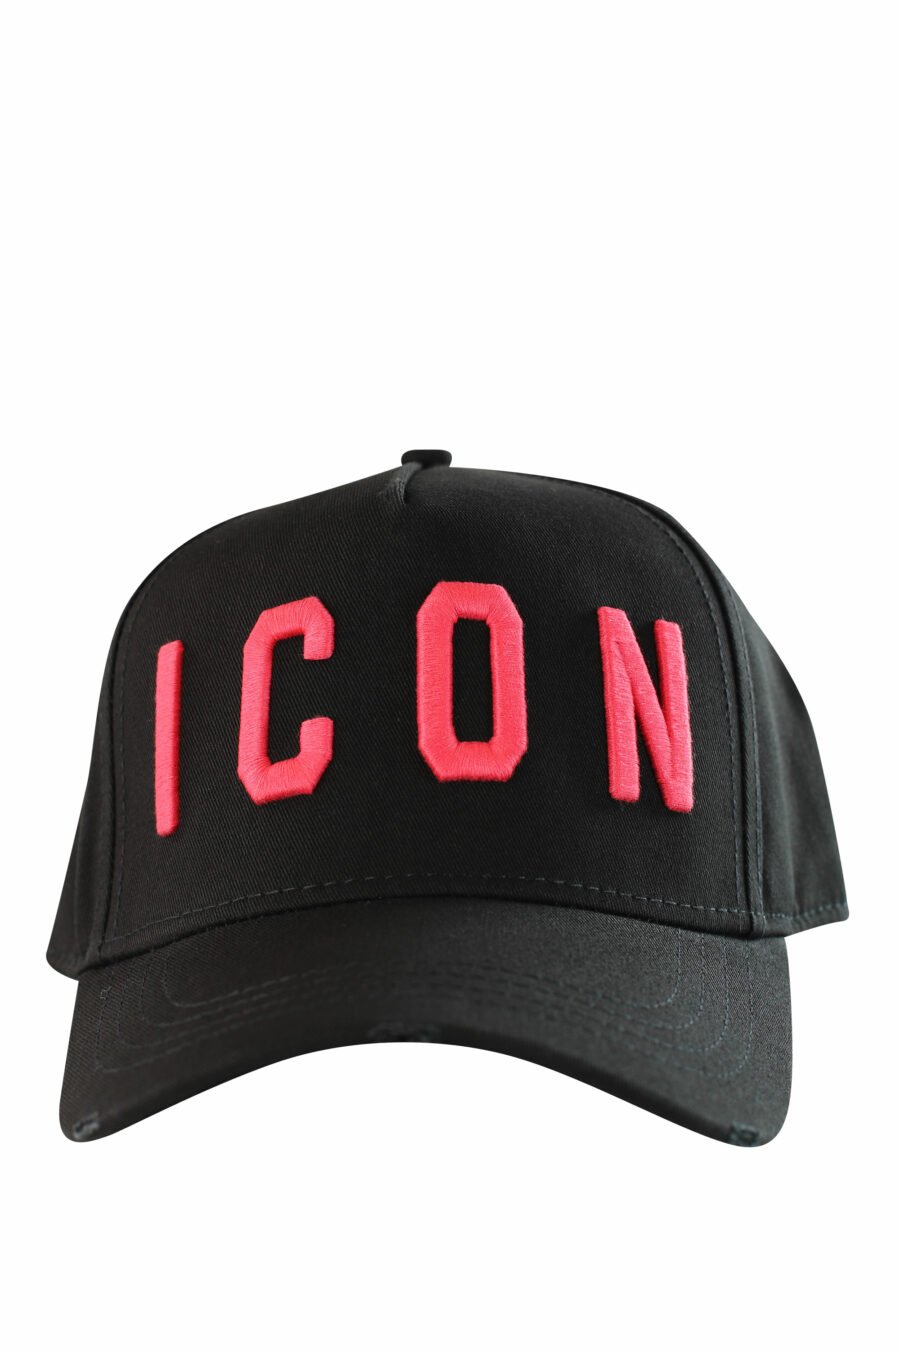 Schwarze Kappe mit aufgesticktem fuchsiafarbenem "Icon"-Logo - IMG 1213